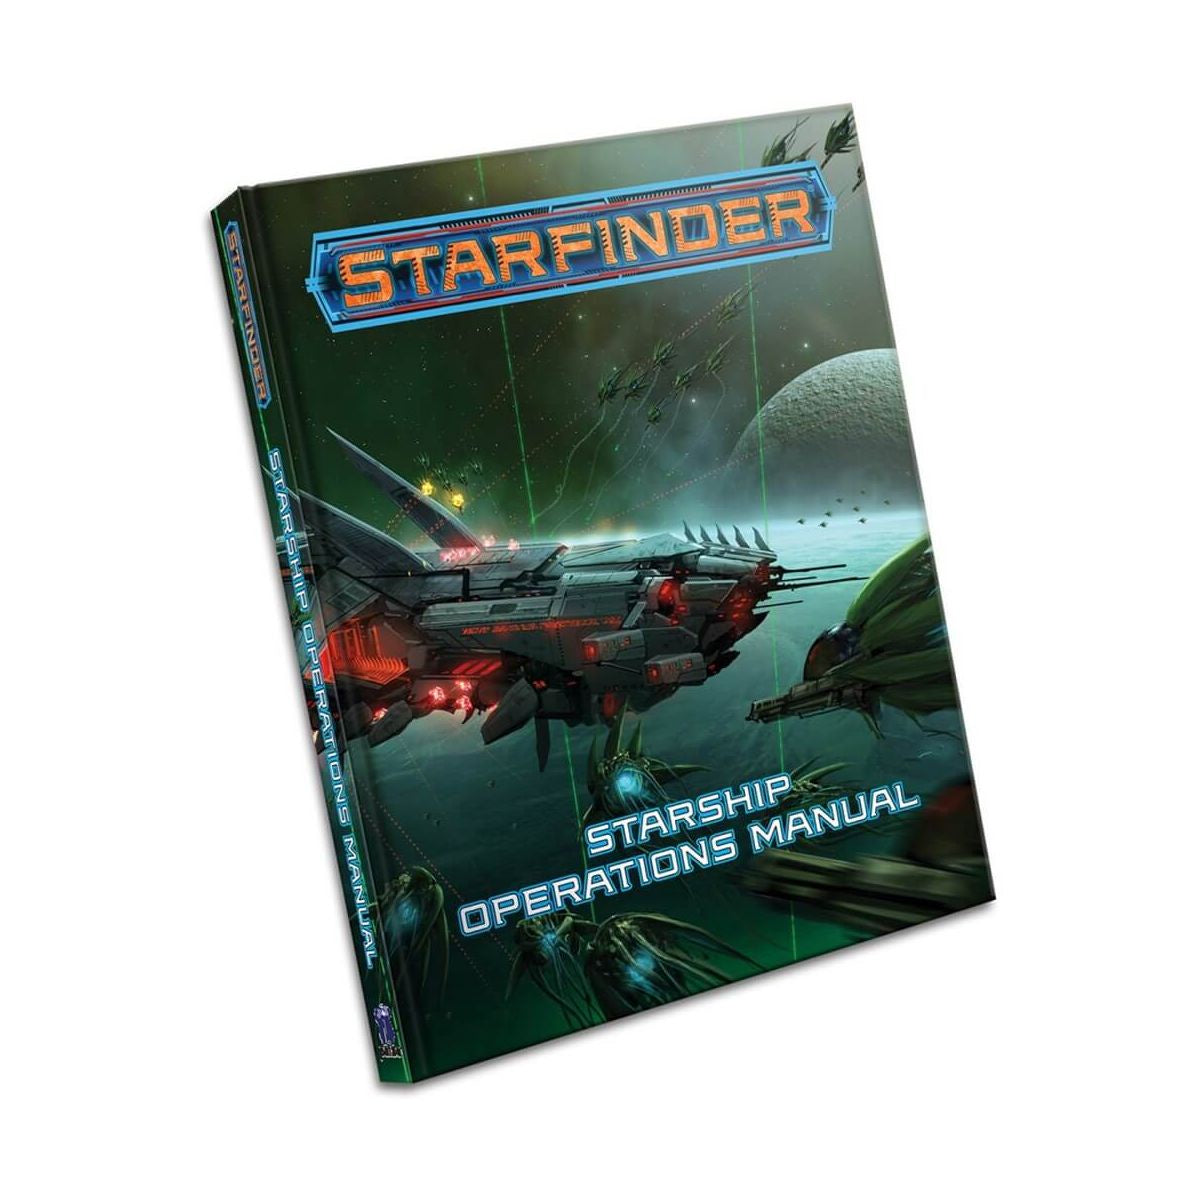 Starfinder RPG - Starship Operations Manual